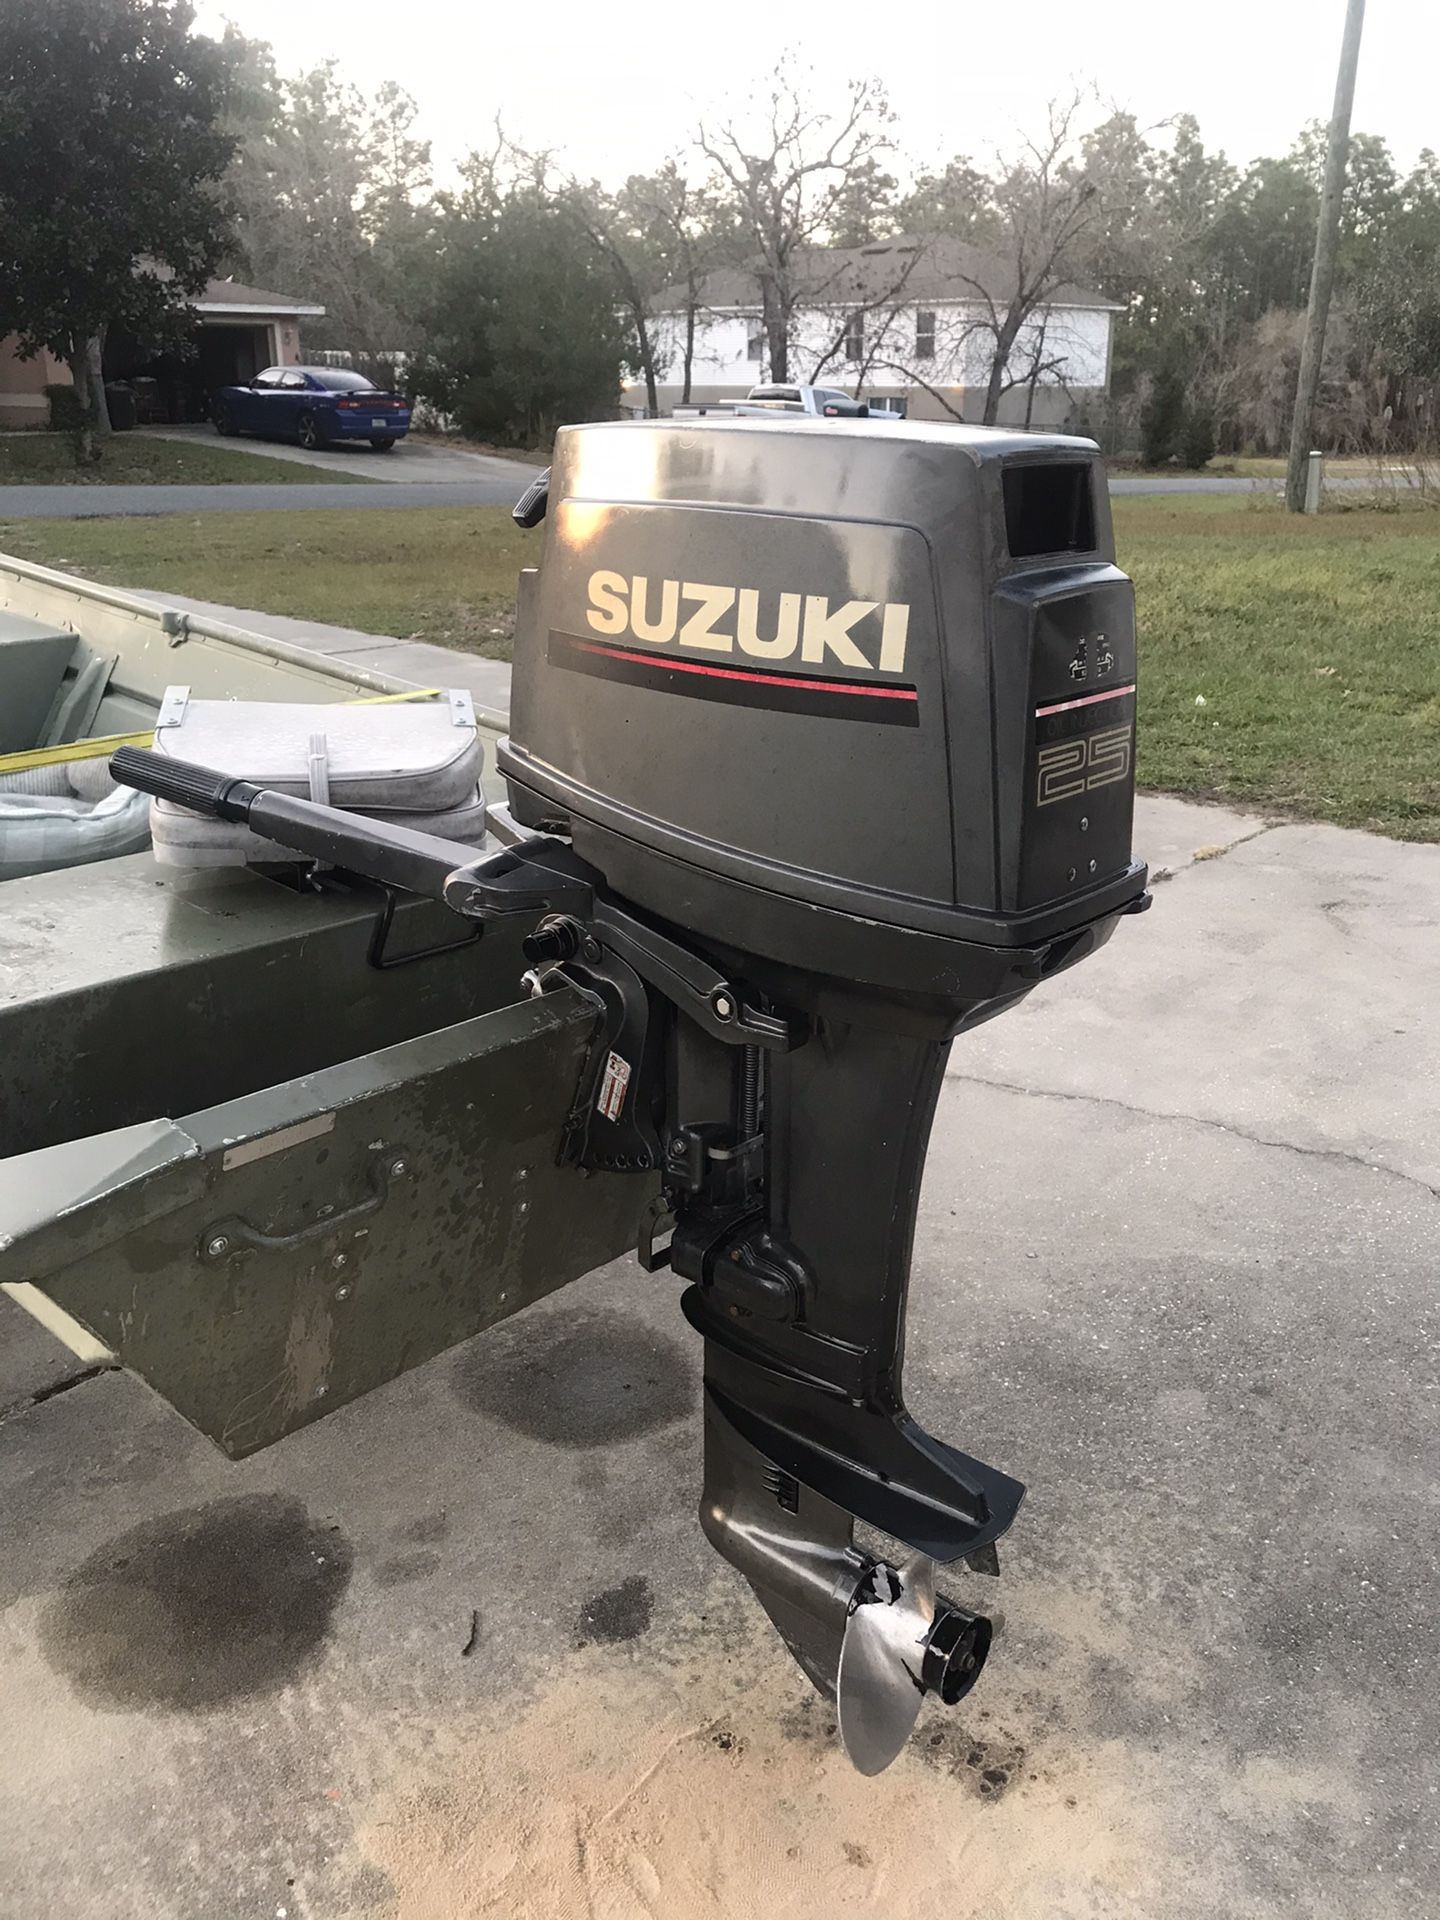 Suzuki 25hp tiller outboard